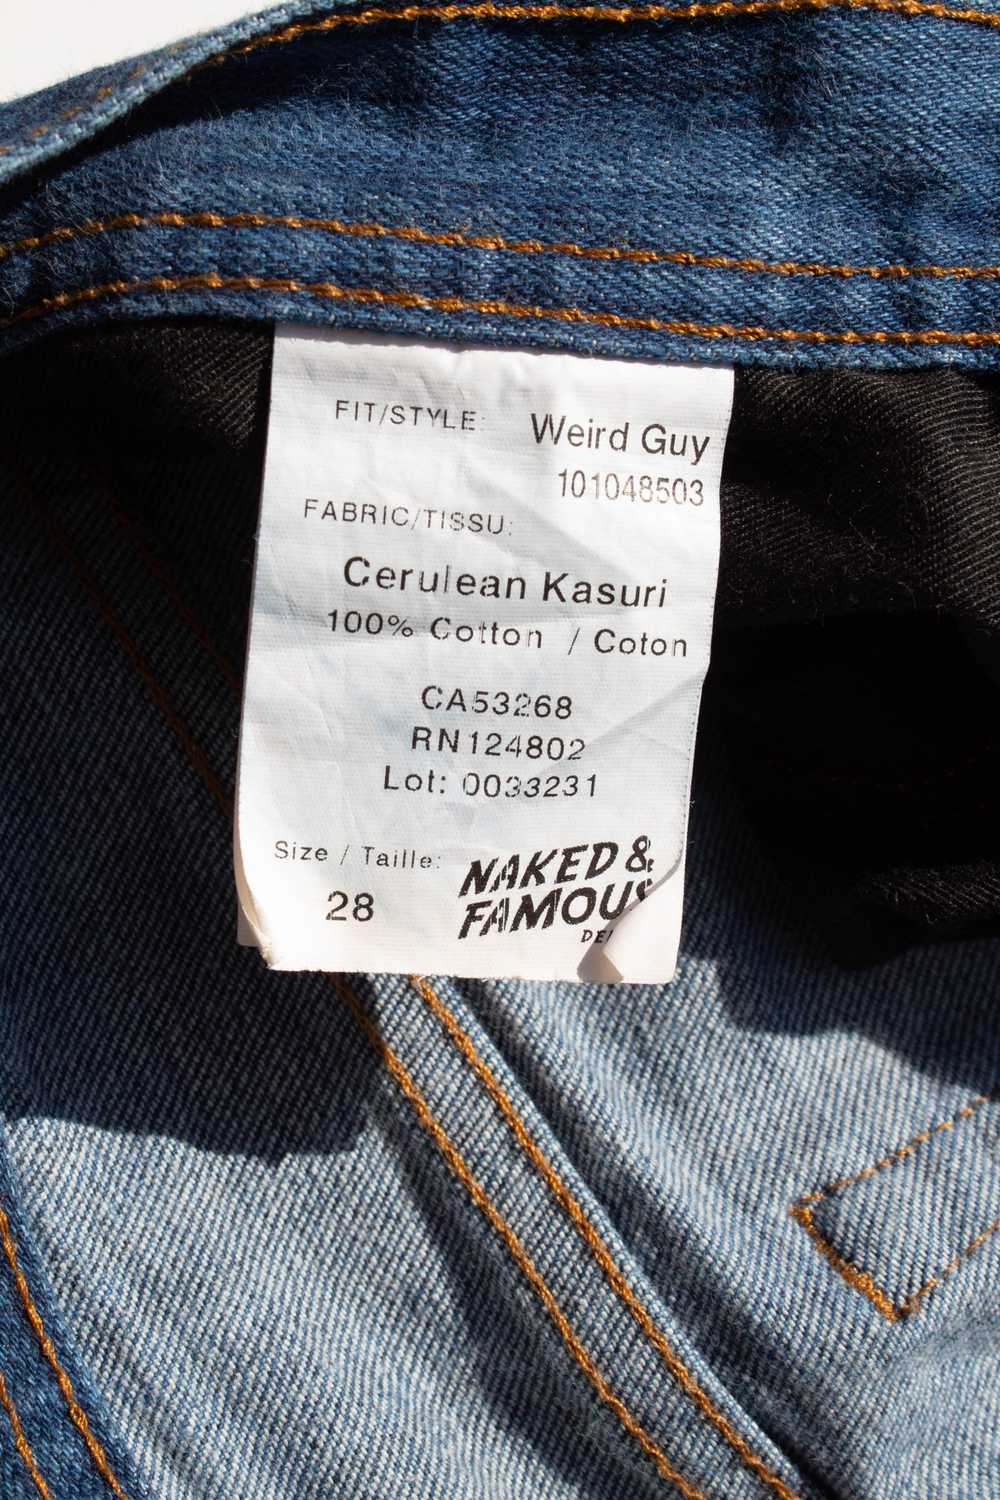 Naked & Famous Cerulean Kasuri - Weird Guy - image 6